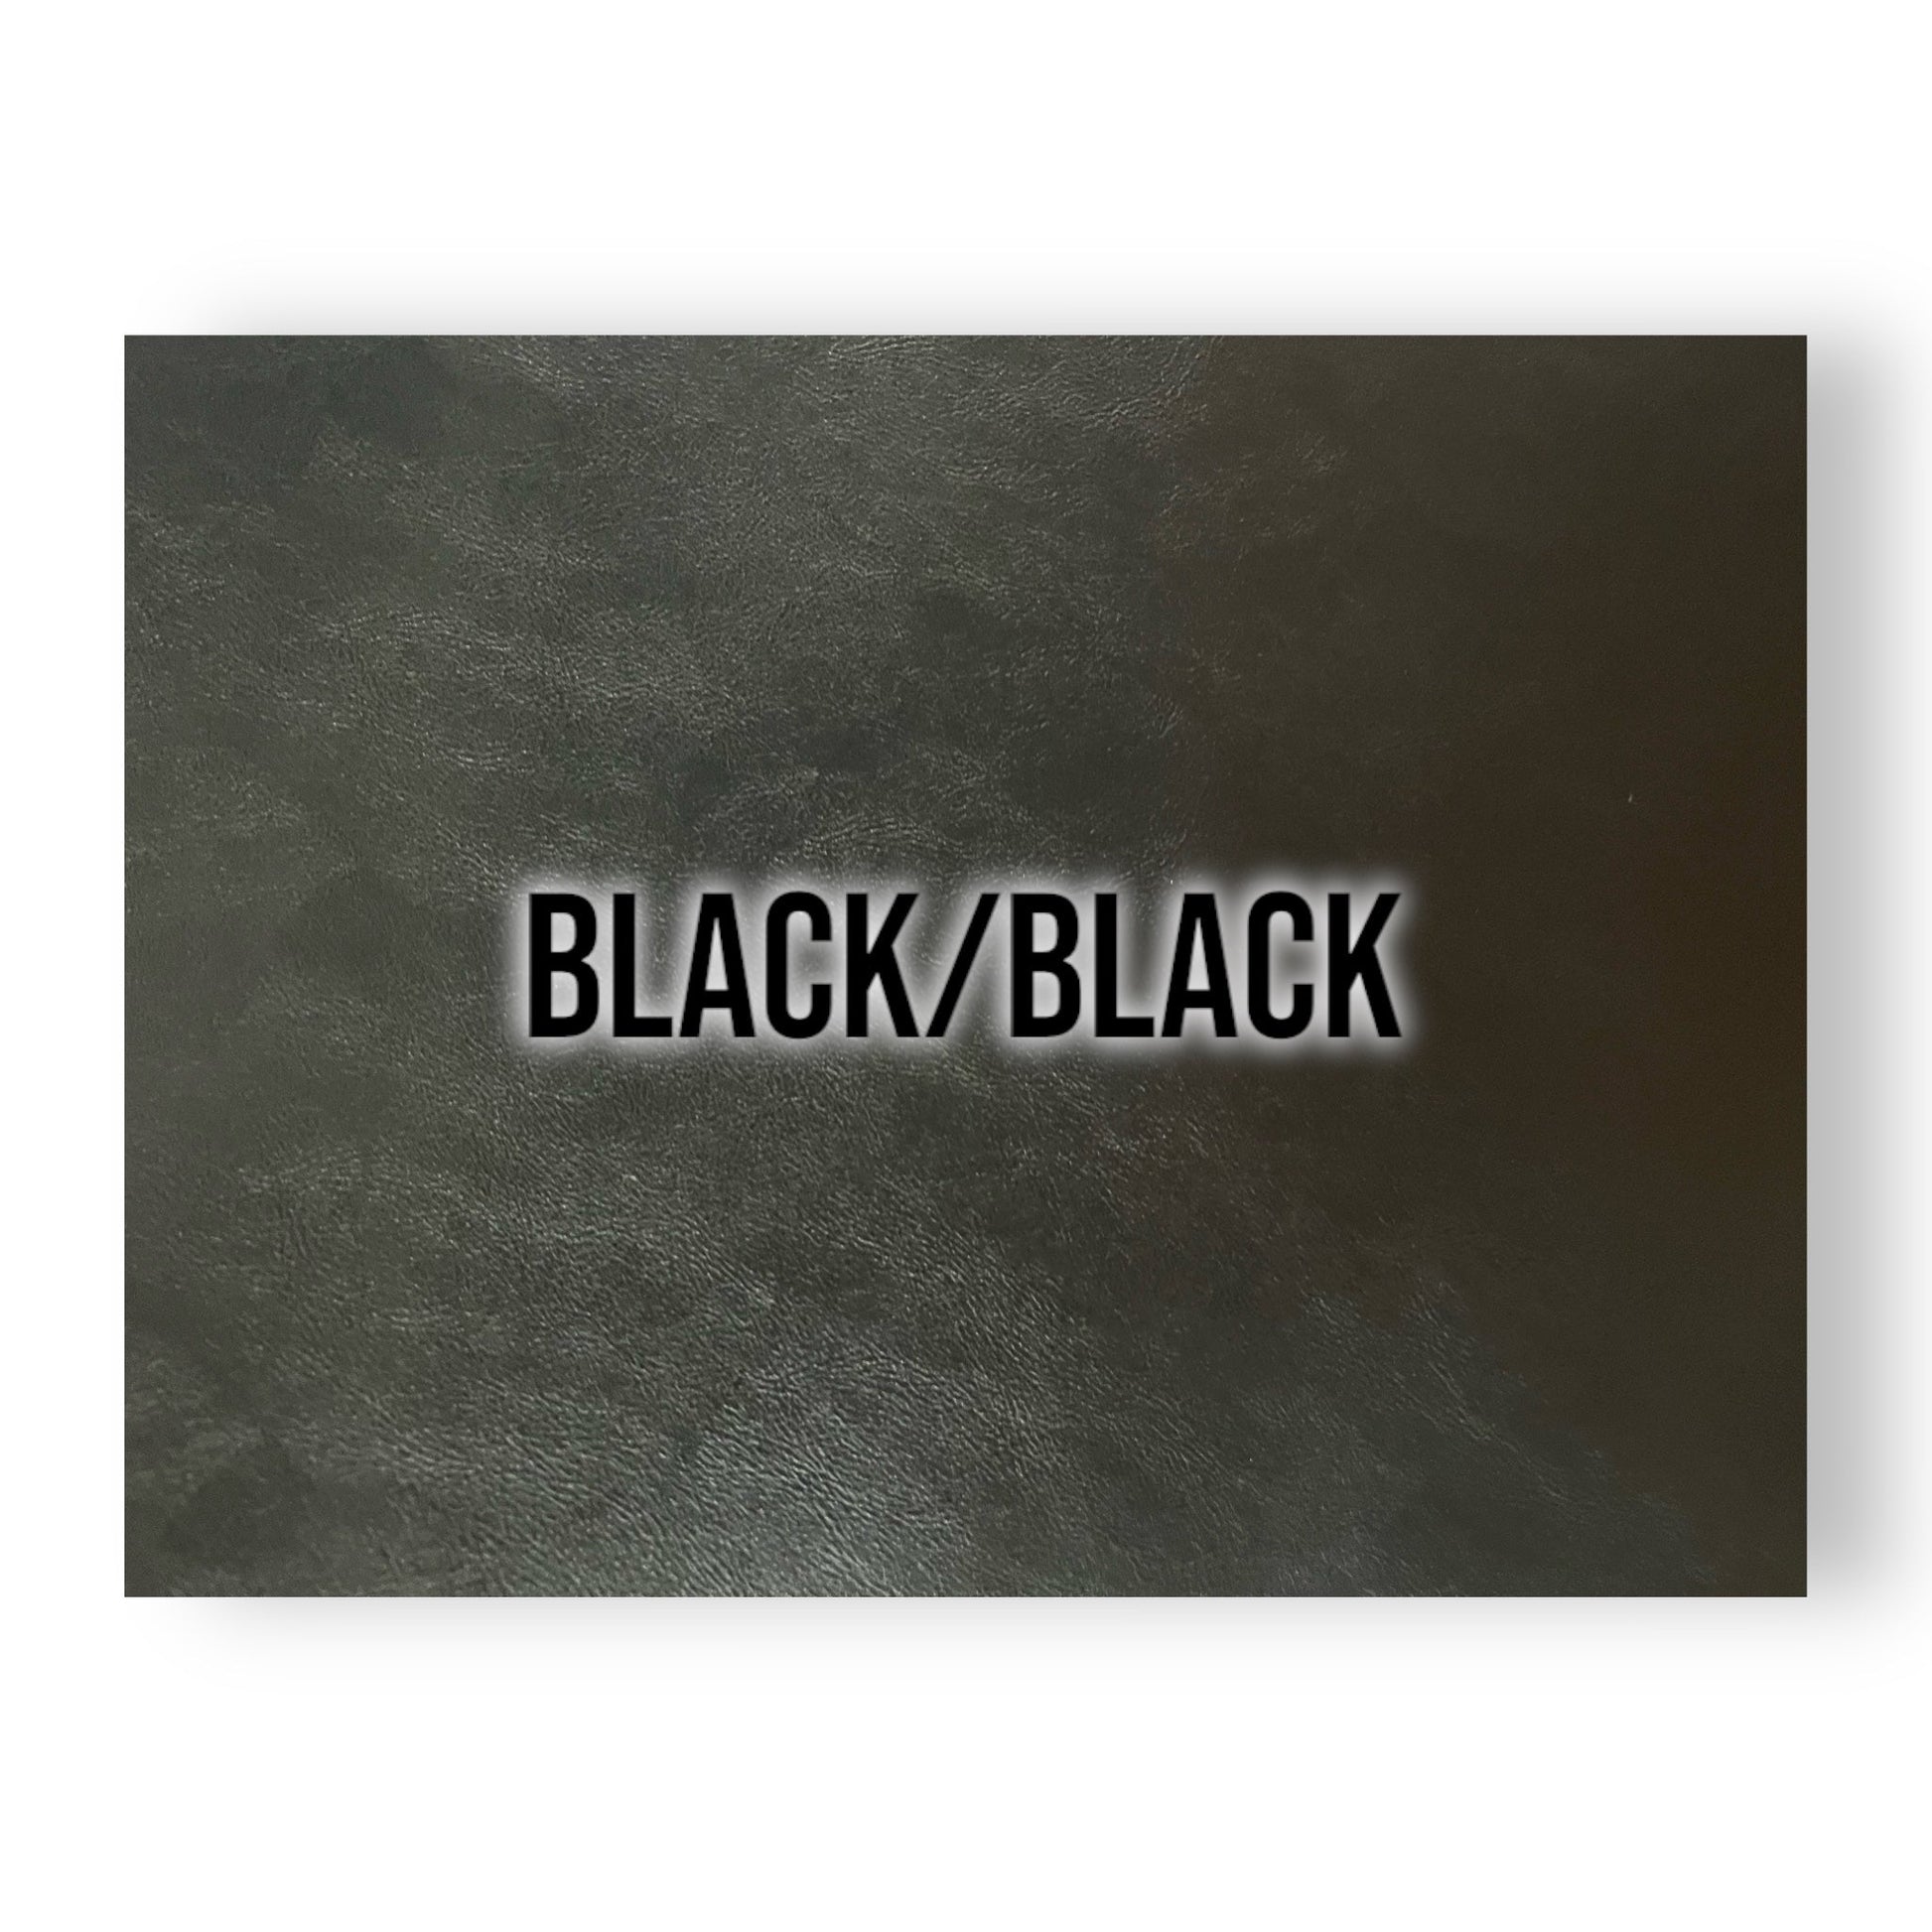 NO ADHESIVE SOLID WHITE/BLACK LEATHERETTE SHEET (12x24) – Hydbond™️